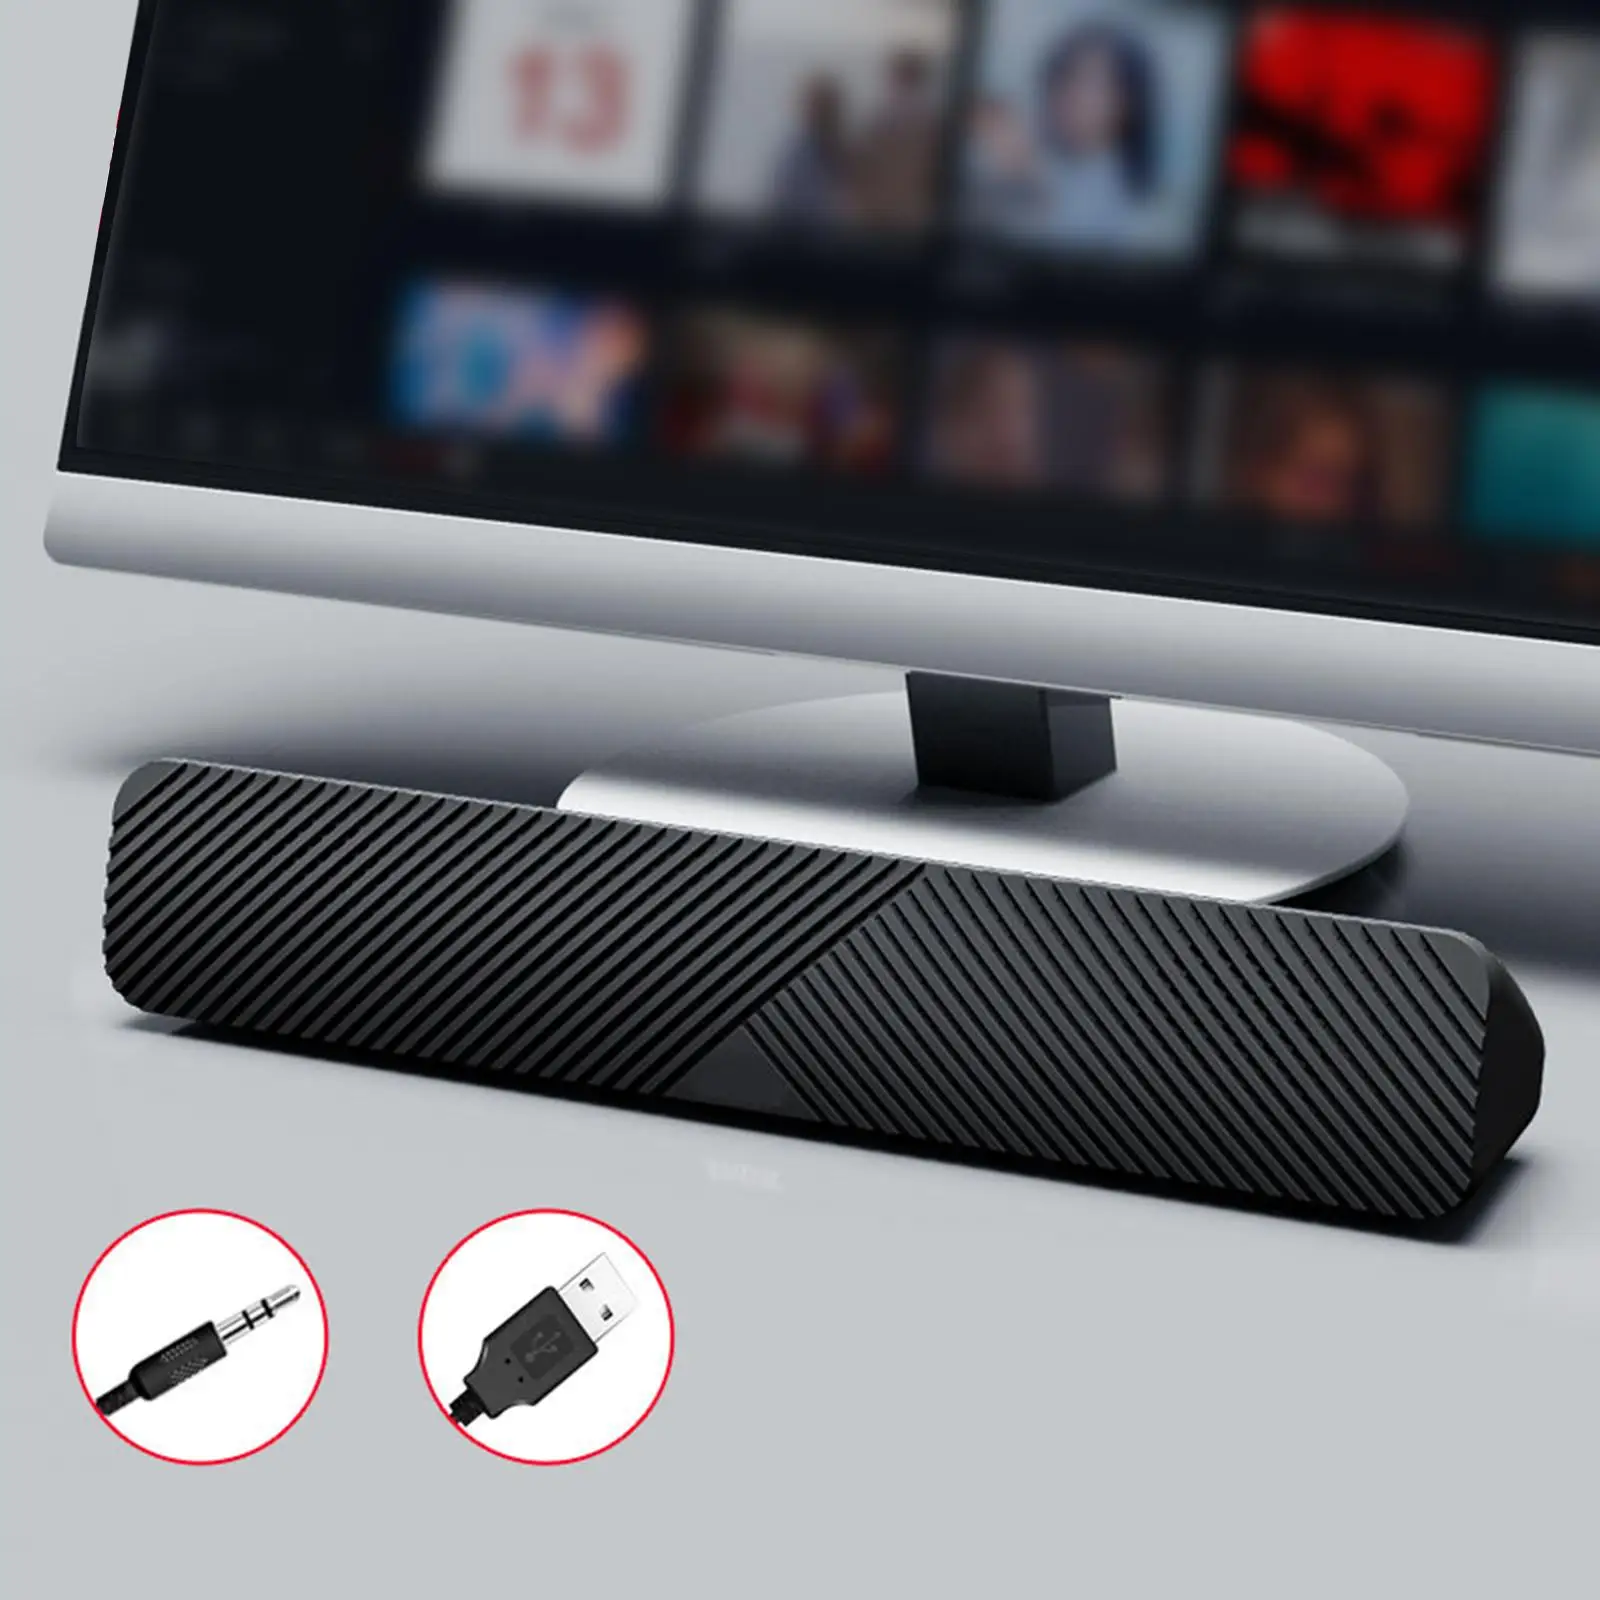 PC Speaker Portable HiFi Surround Sound Compact Size 3.5mm Audio USB Powered Desktop Speaker for Desktop PC Notebooks Laptops